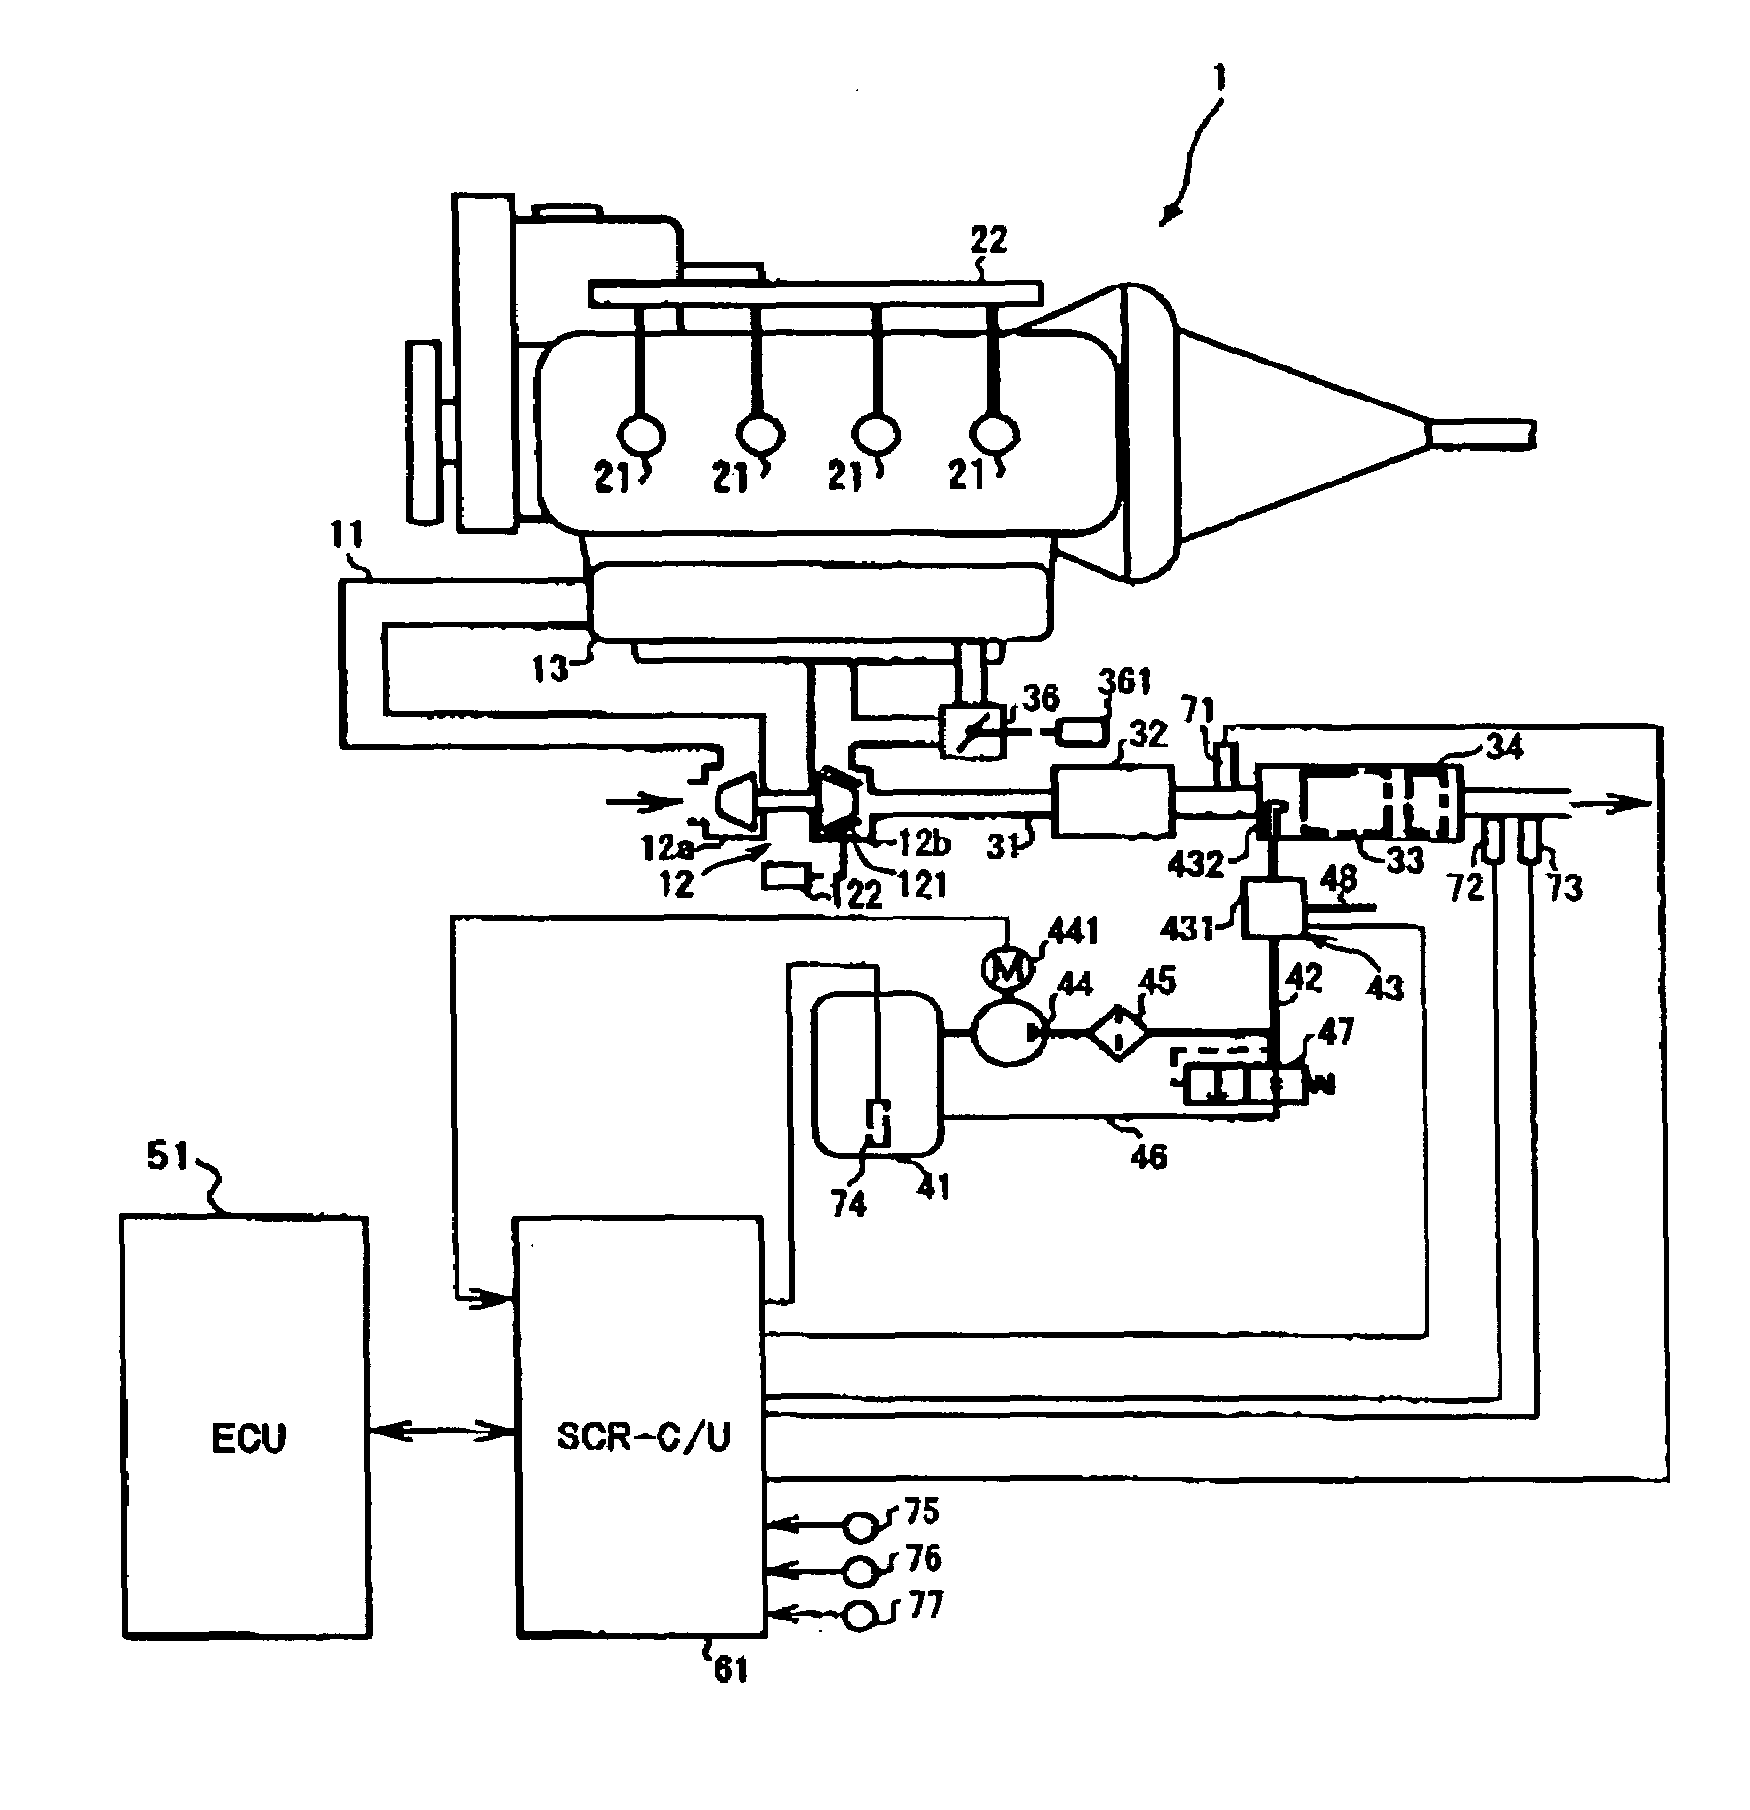 Engine control apparatus and engine operating method